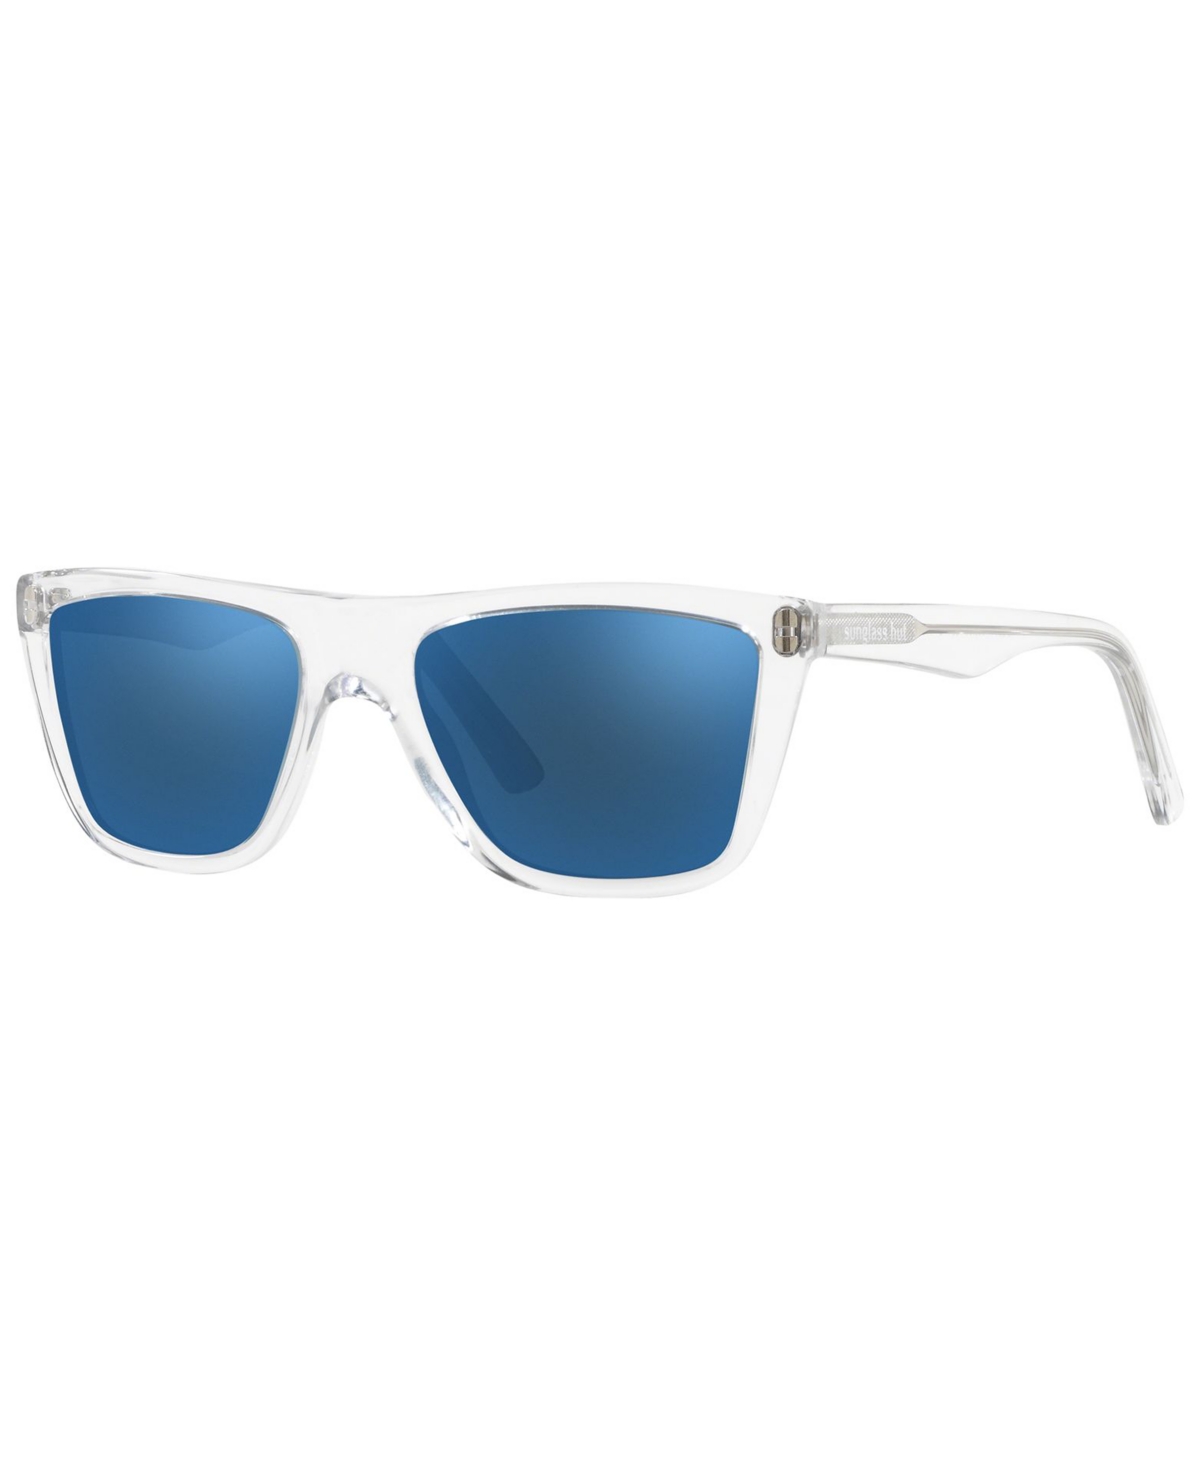 Sunglasses, HU2014 53 - TRASPARENT/ BLUE MIRROR BLUE